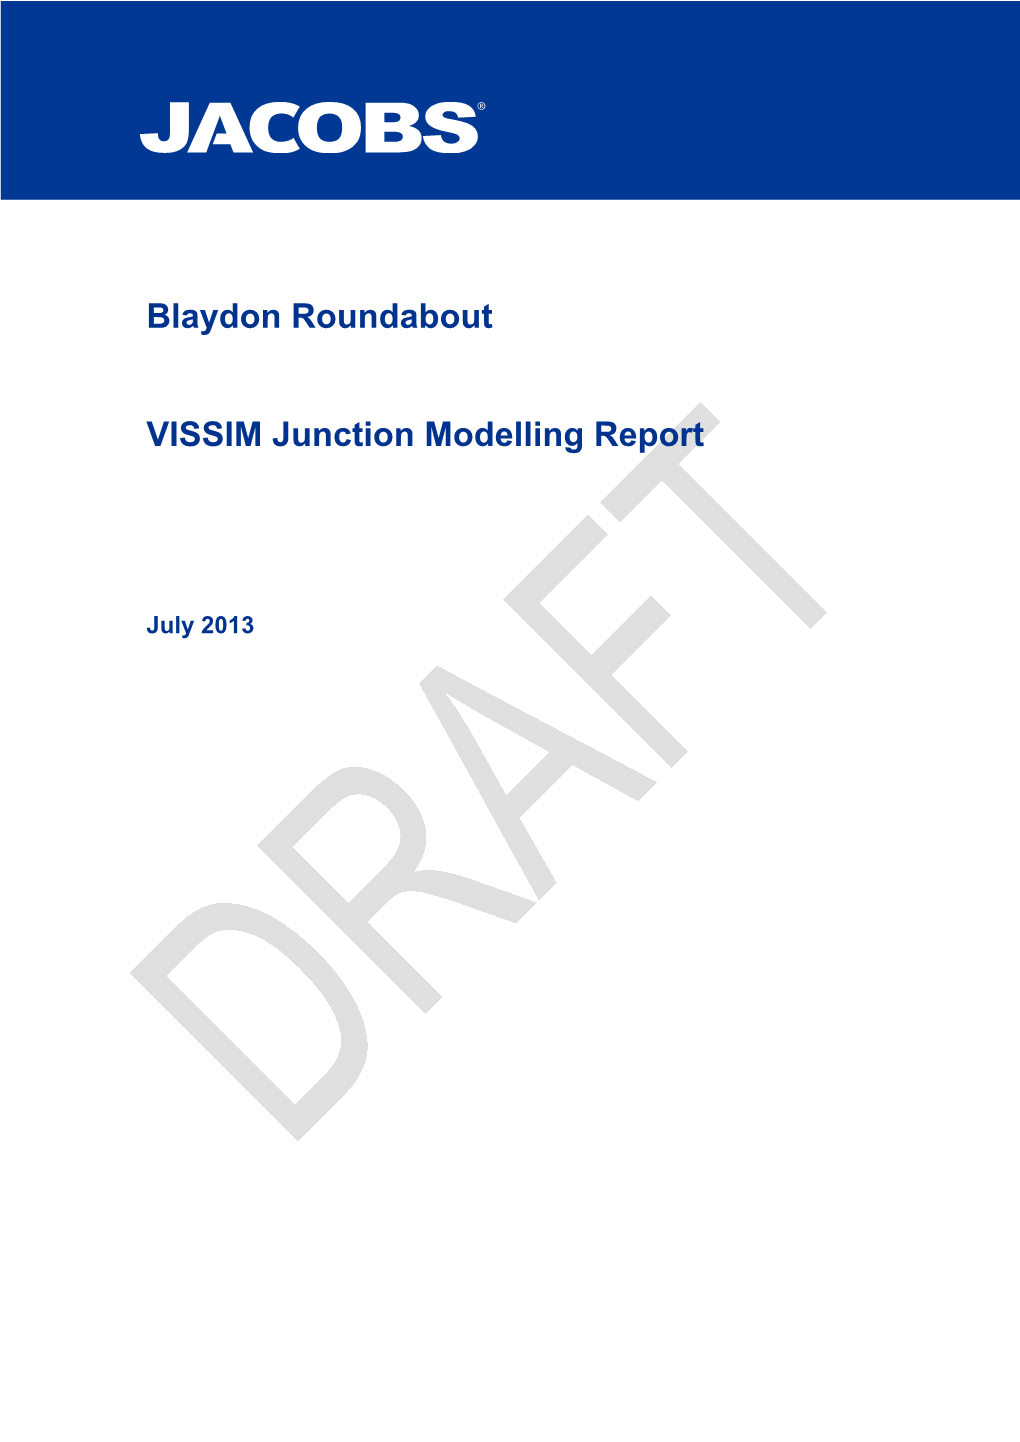 Blaydon Roundabout VISSIM Junction Modelling Report